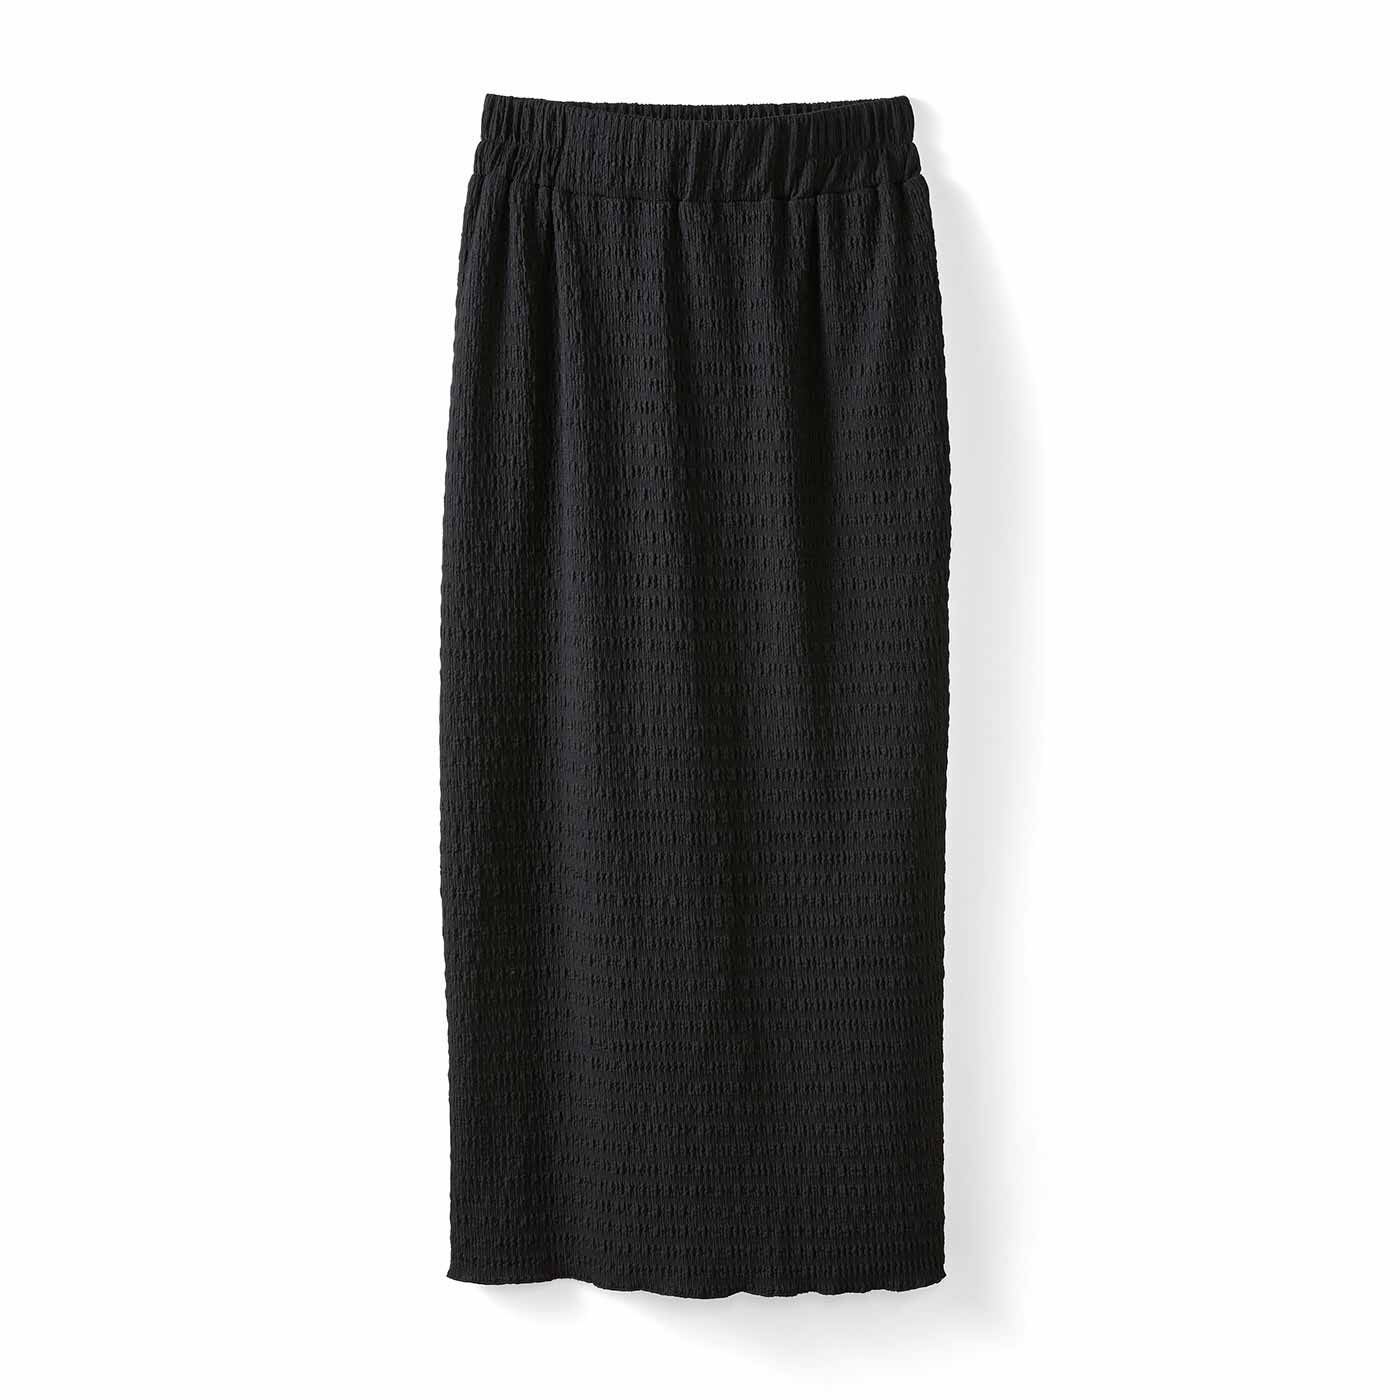 IEDIT | ふくれ ジャカード カットソー素材 Iライン スカート〈黒〉